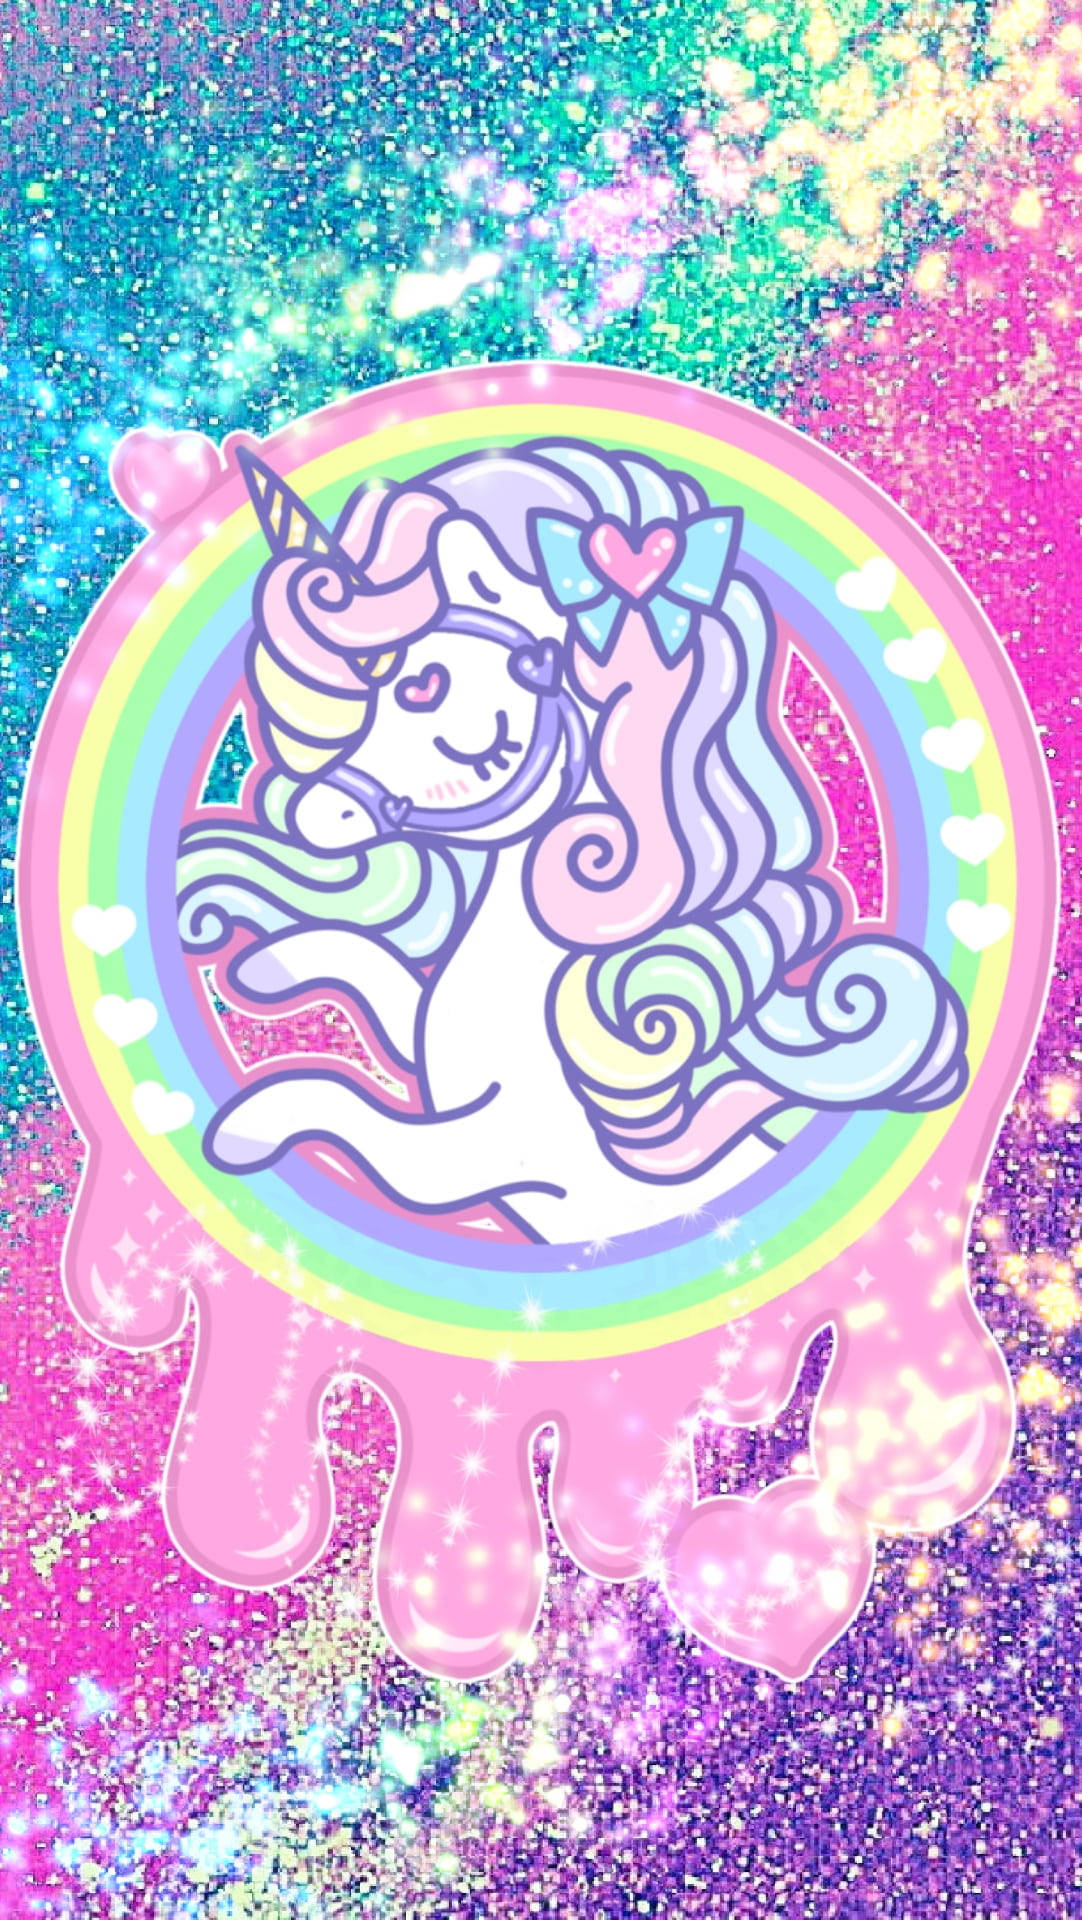 Glitter And Unicorns In A Circular Rainbow